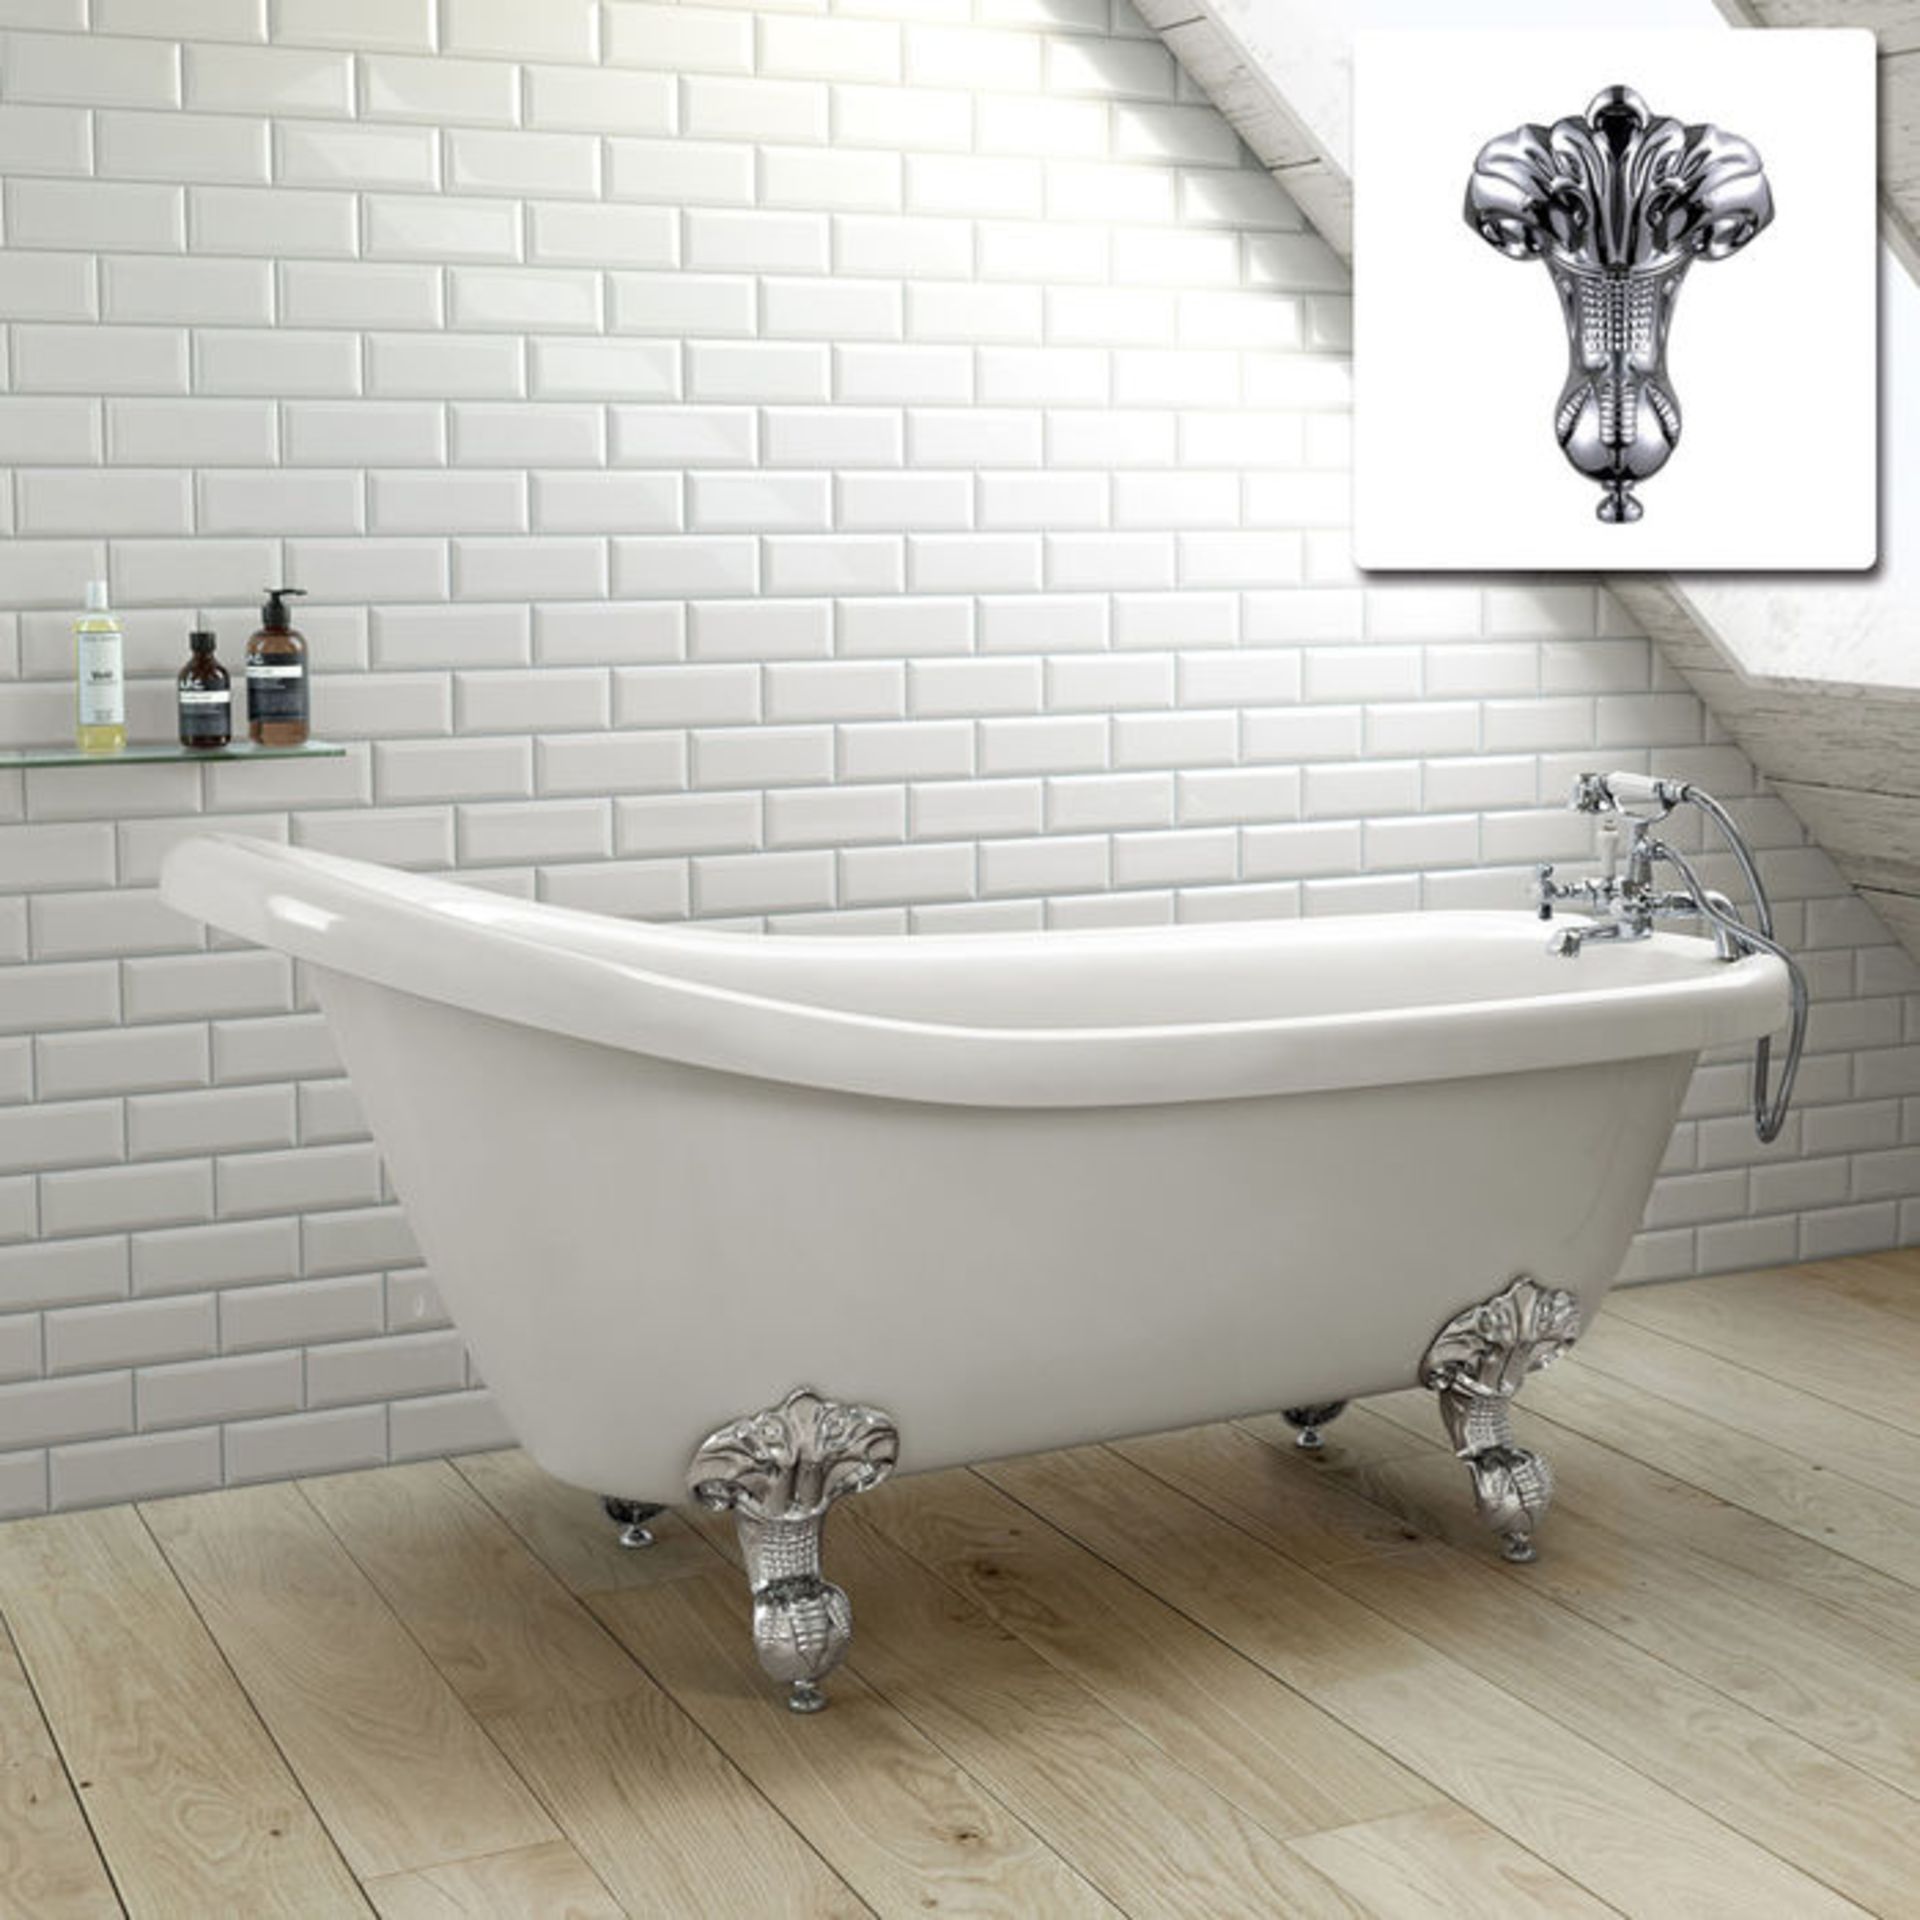 Brand New (QW5) 1550mm Cambridge Traditional Roll Top Slipper Bath - Ball Feet. RRP £899.99. Bath ma - Image 2 of 4